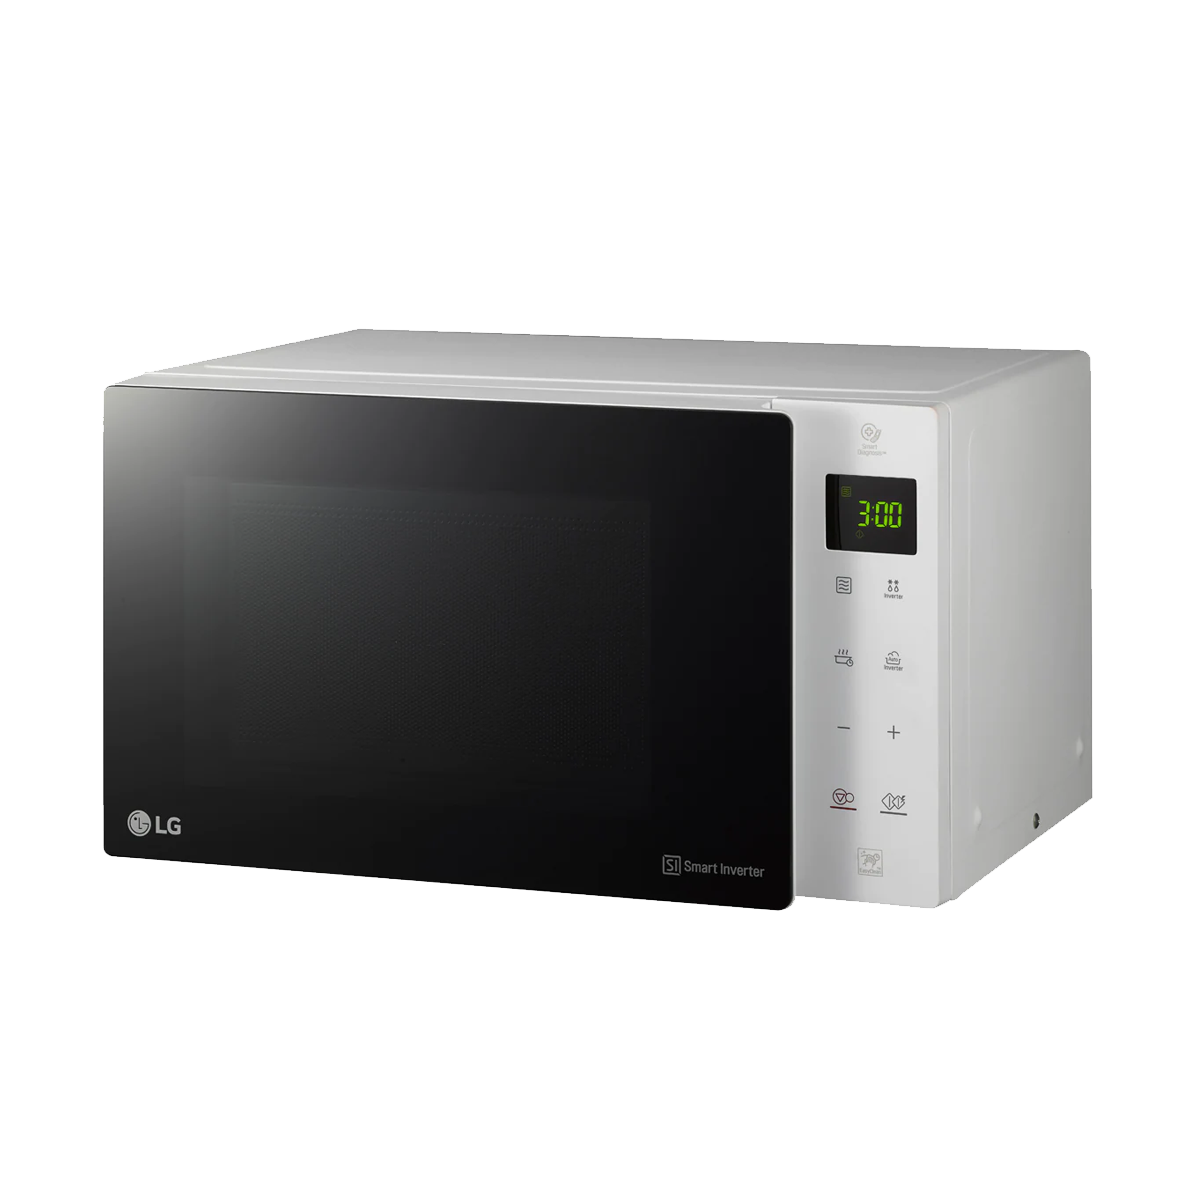 LG 25L Smart Inverter Neo Chef Microwave Oven